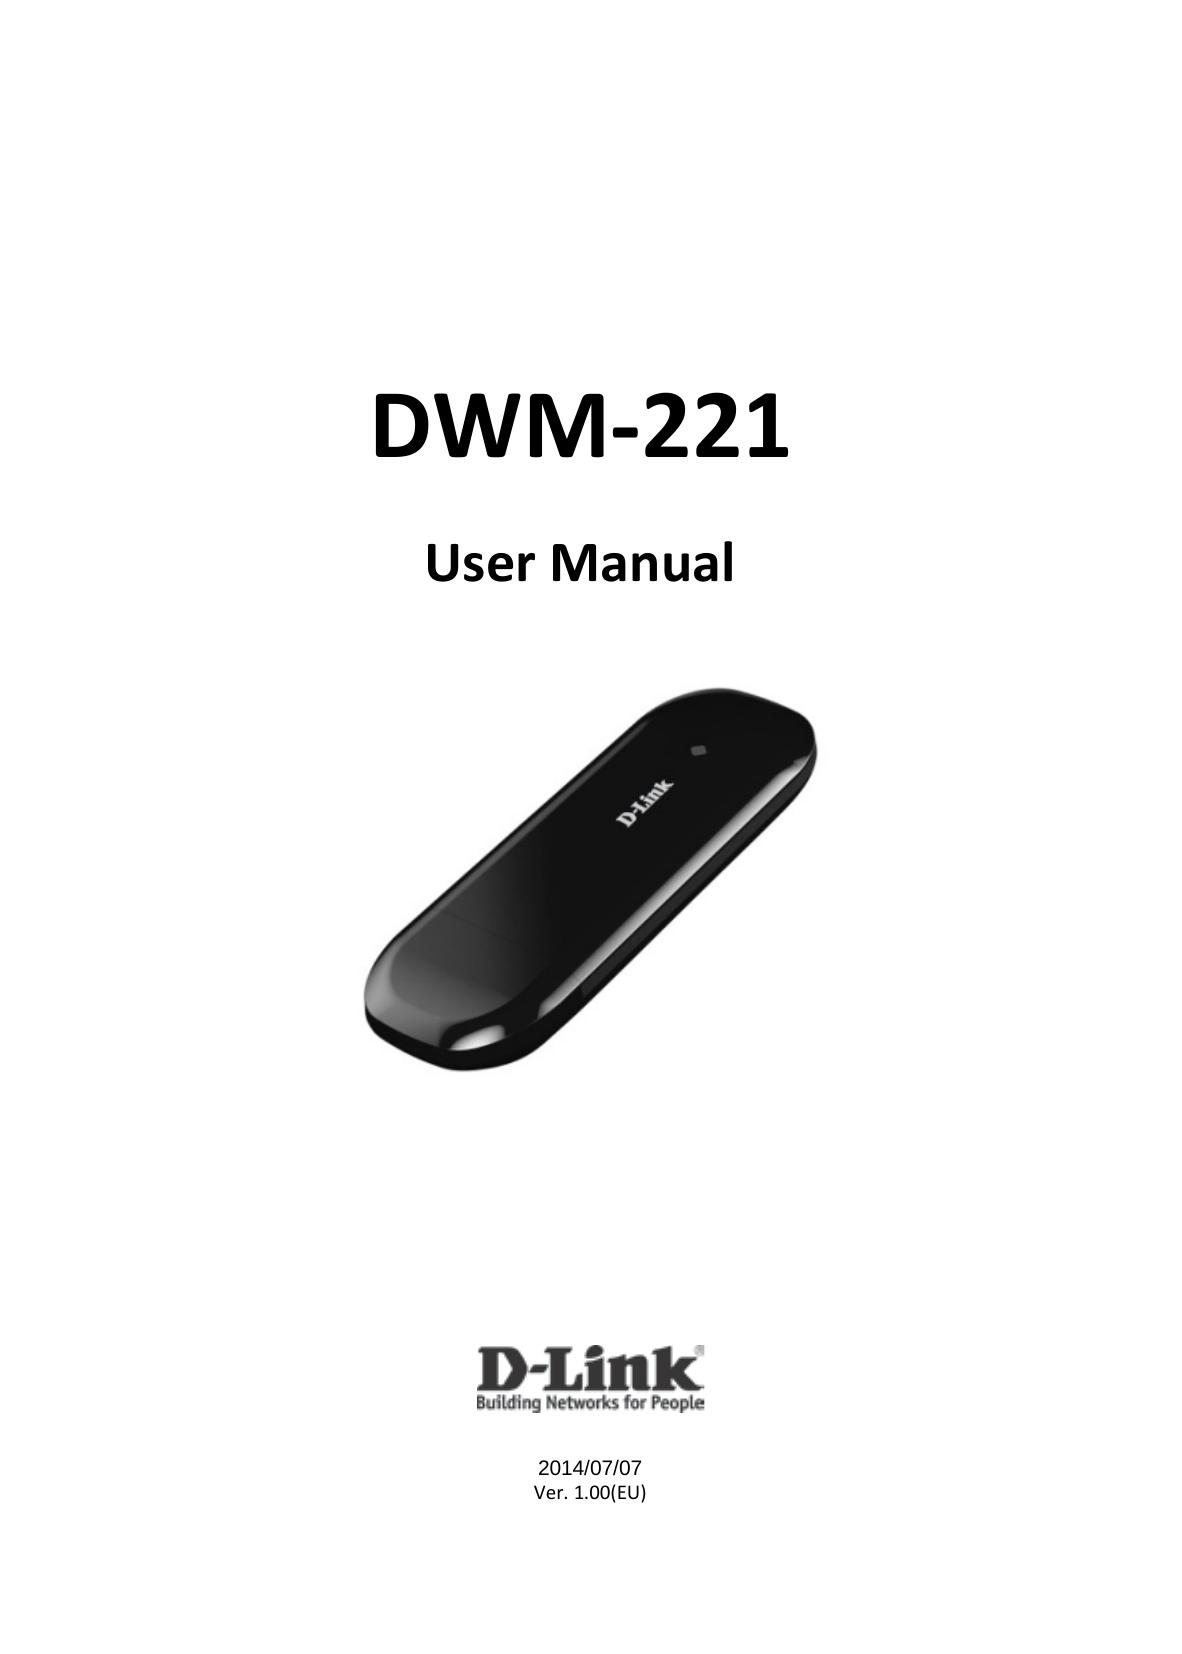 D-Link DWM-221 Marine Sanitation System User Manual